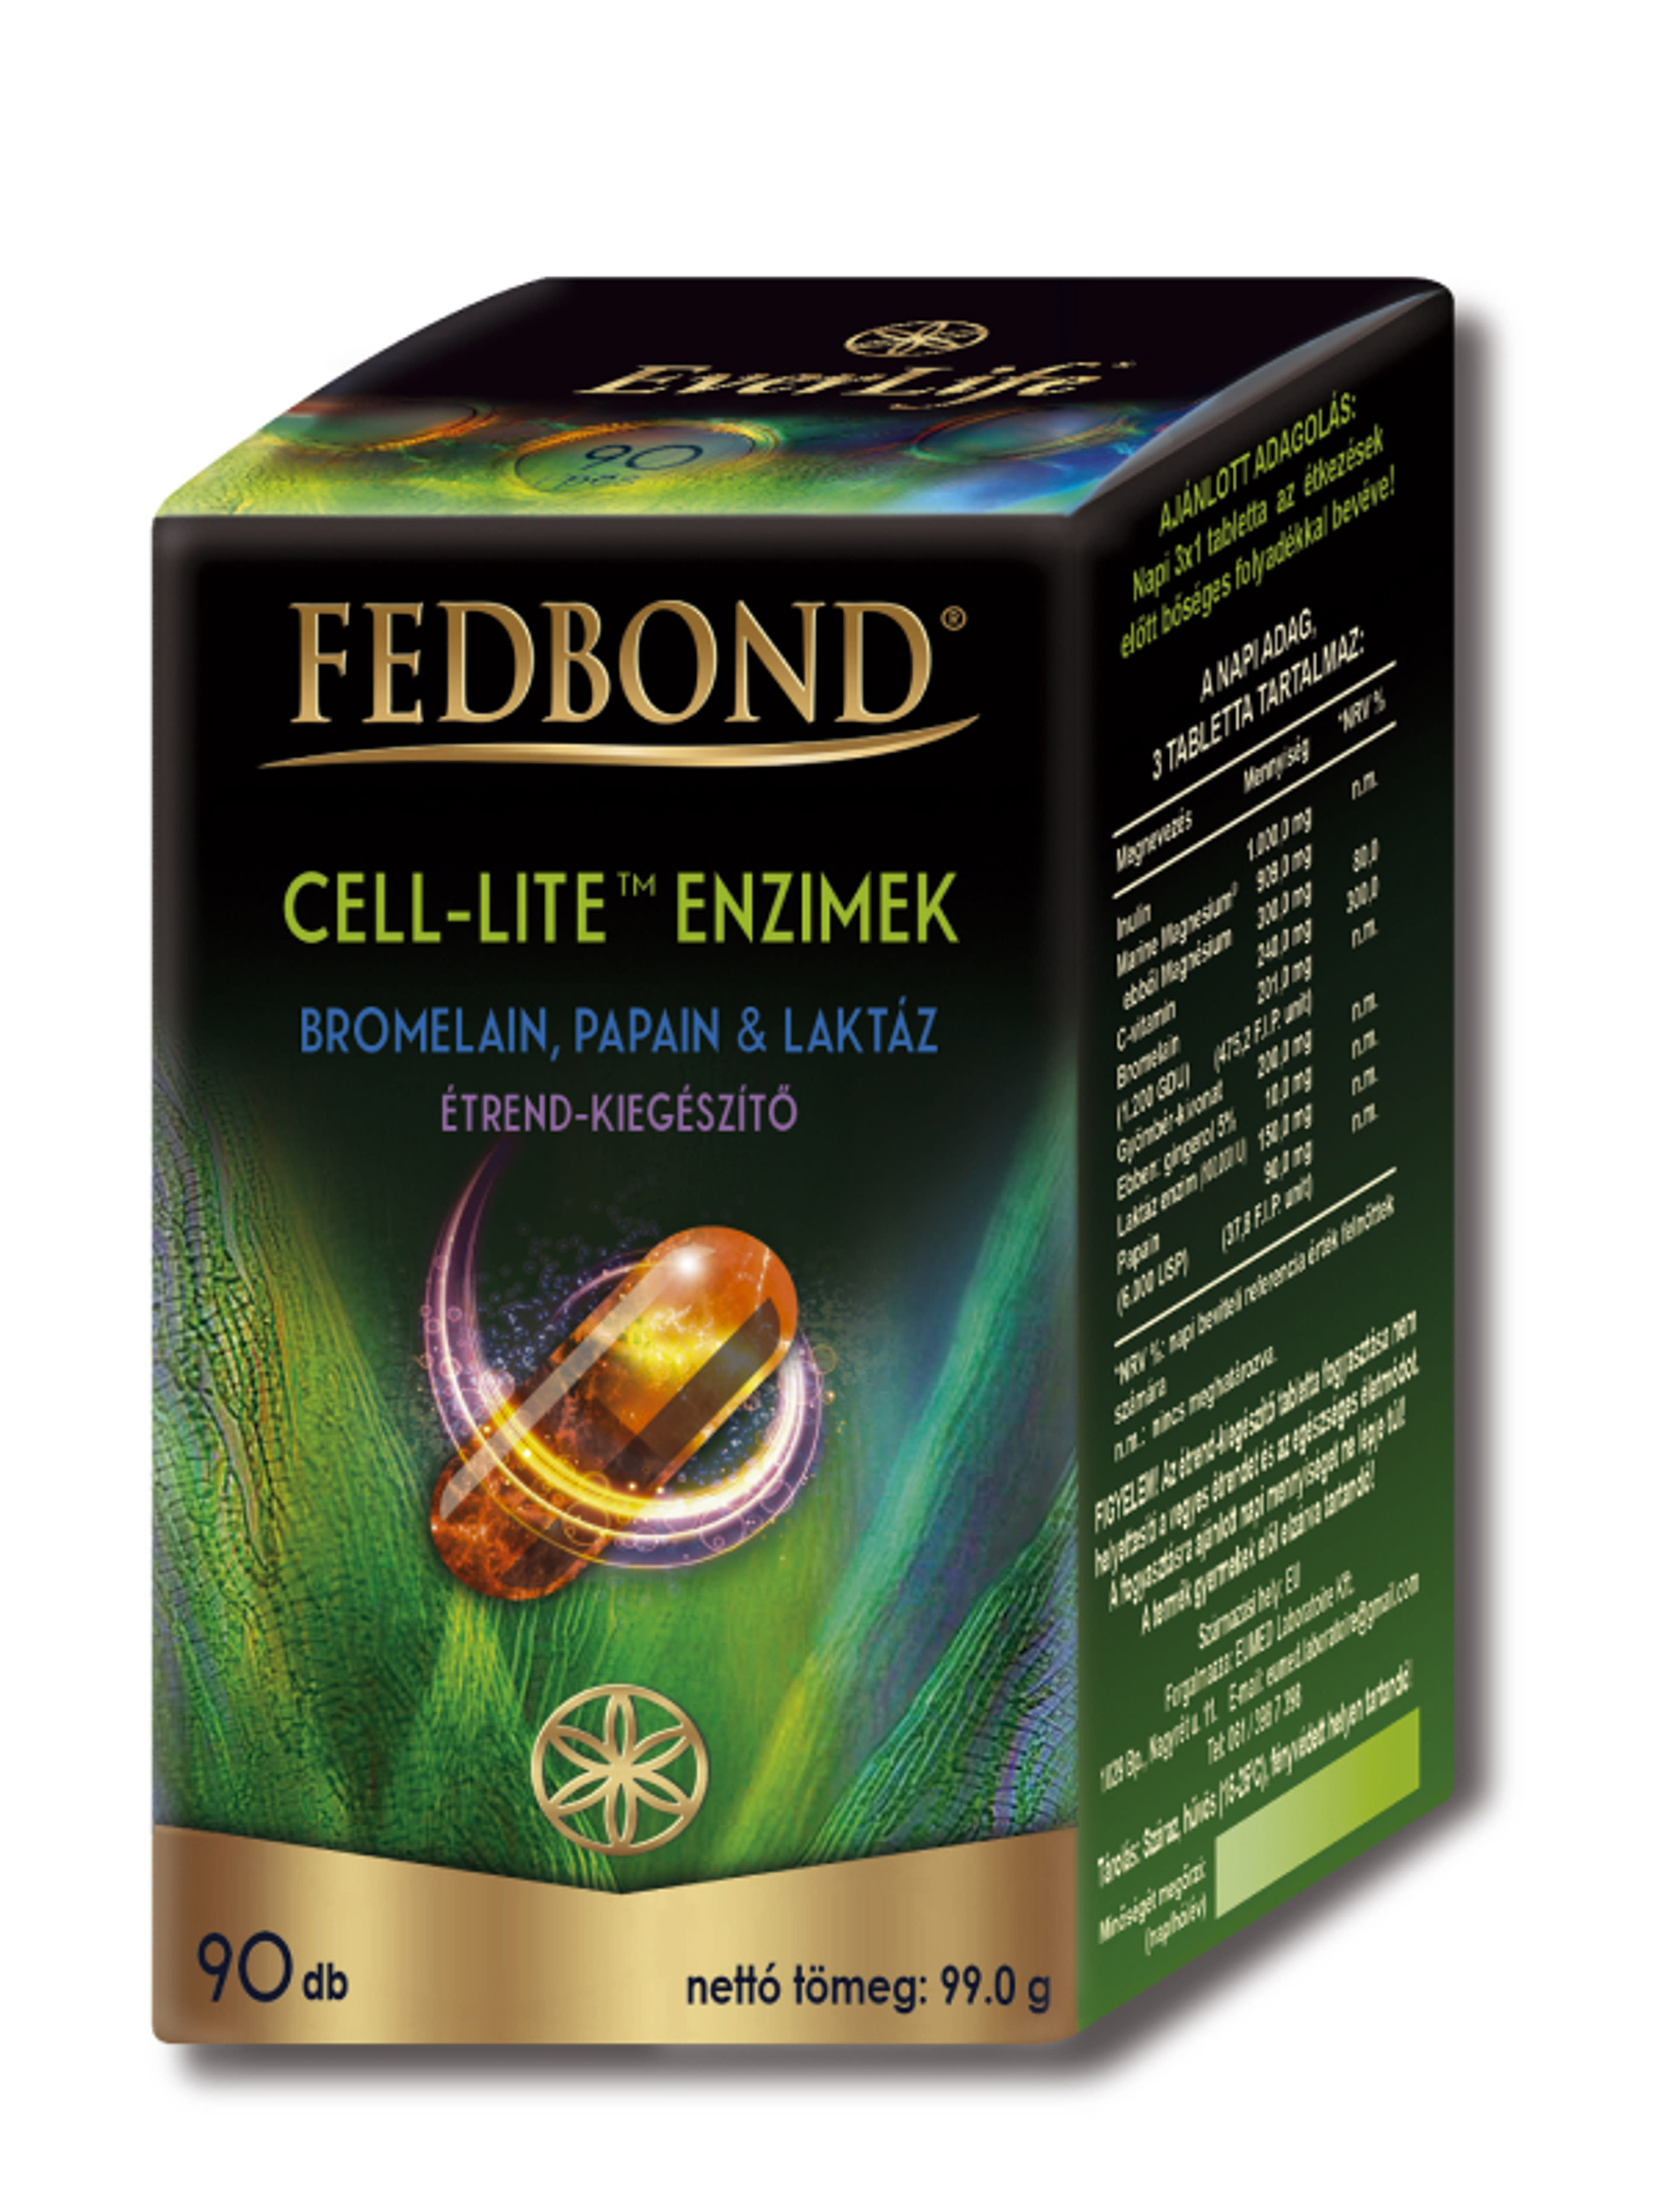 Fedbond Cell-Lite enzimek tabletta - 90 db-1